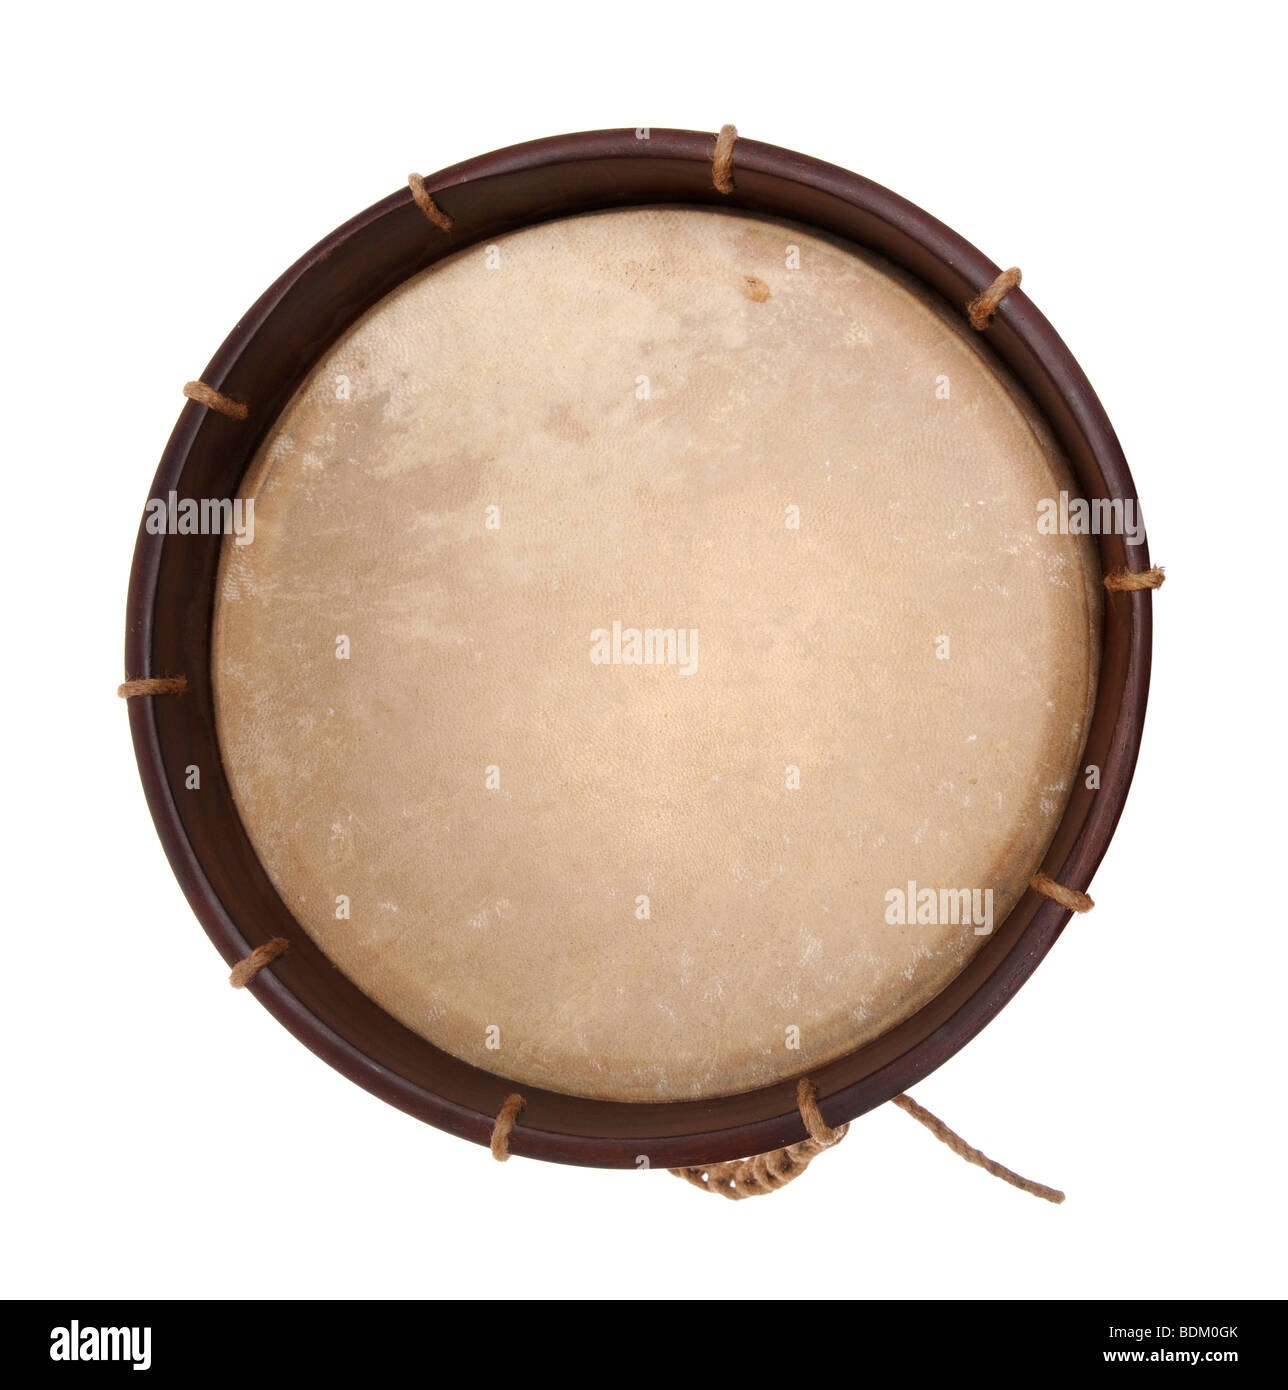 93,200+ Drum Percussion Instrument Stock Photos, Pictures